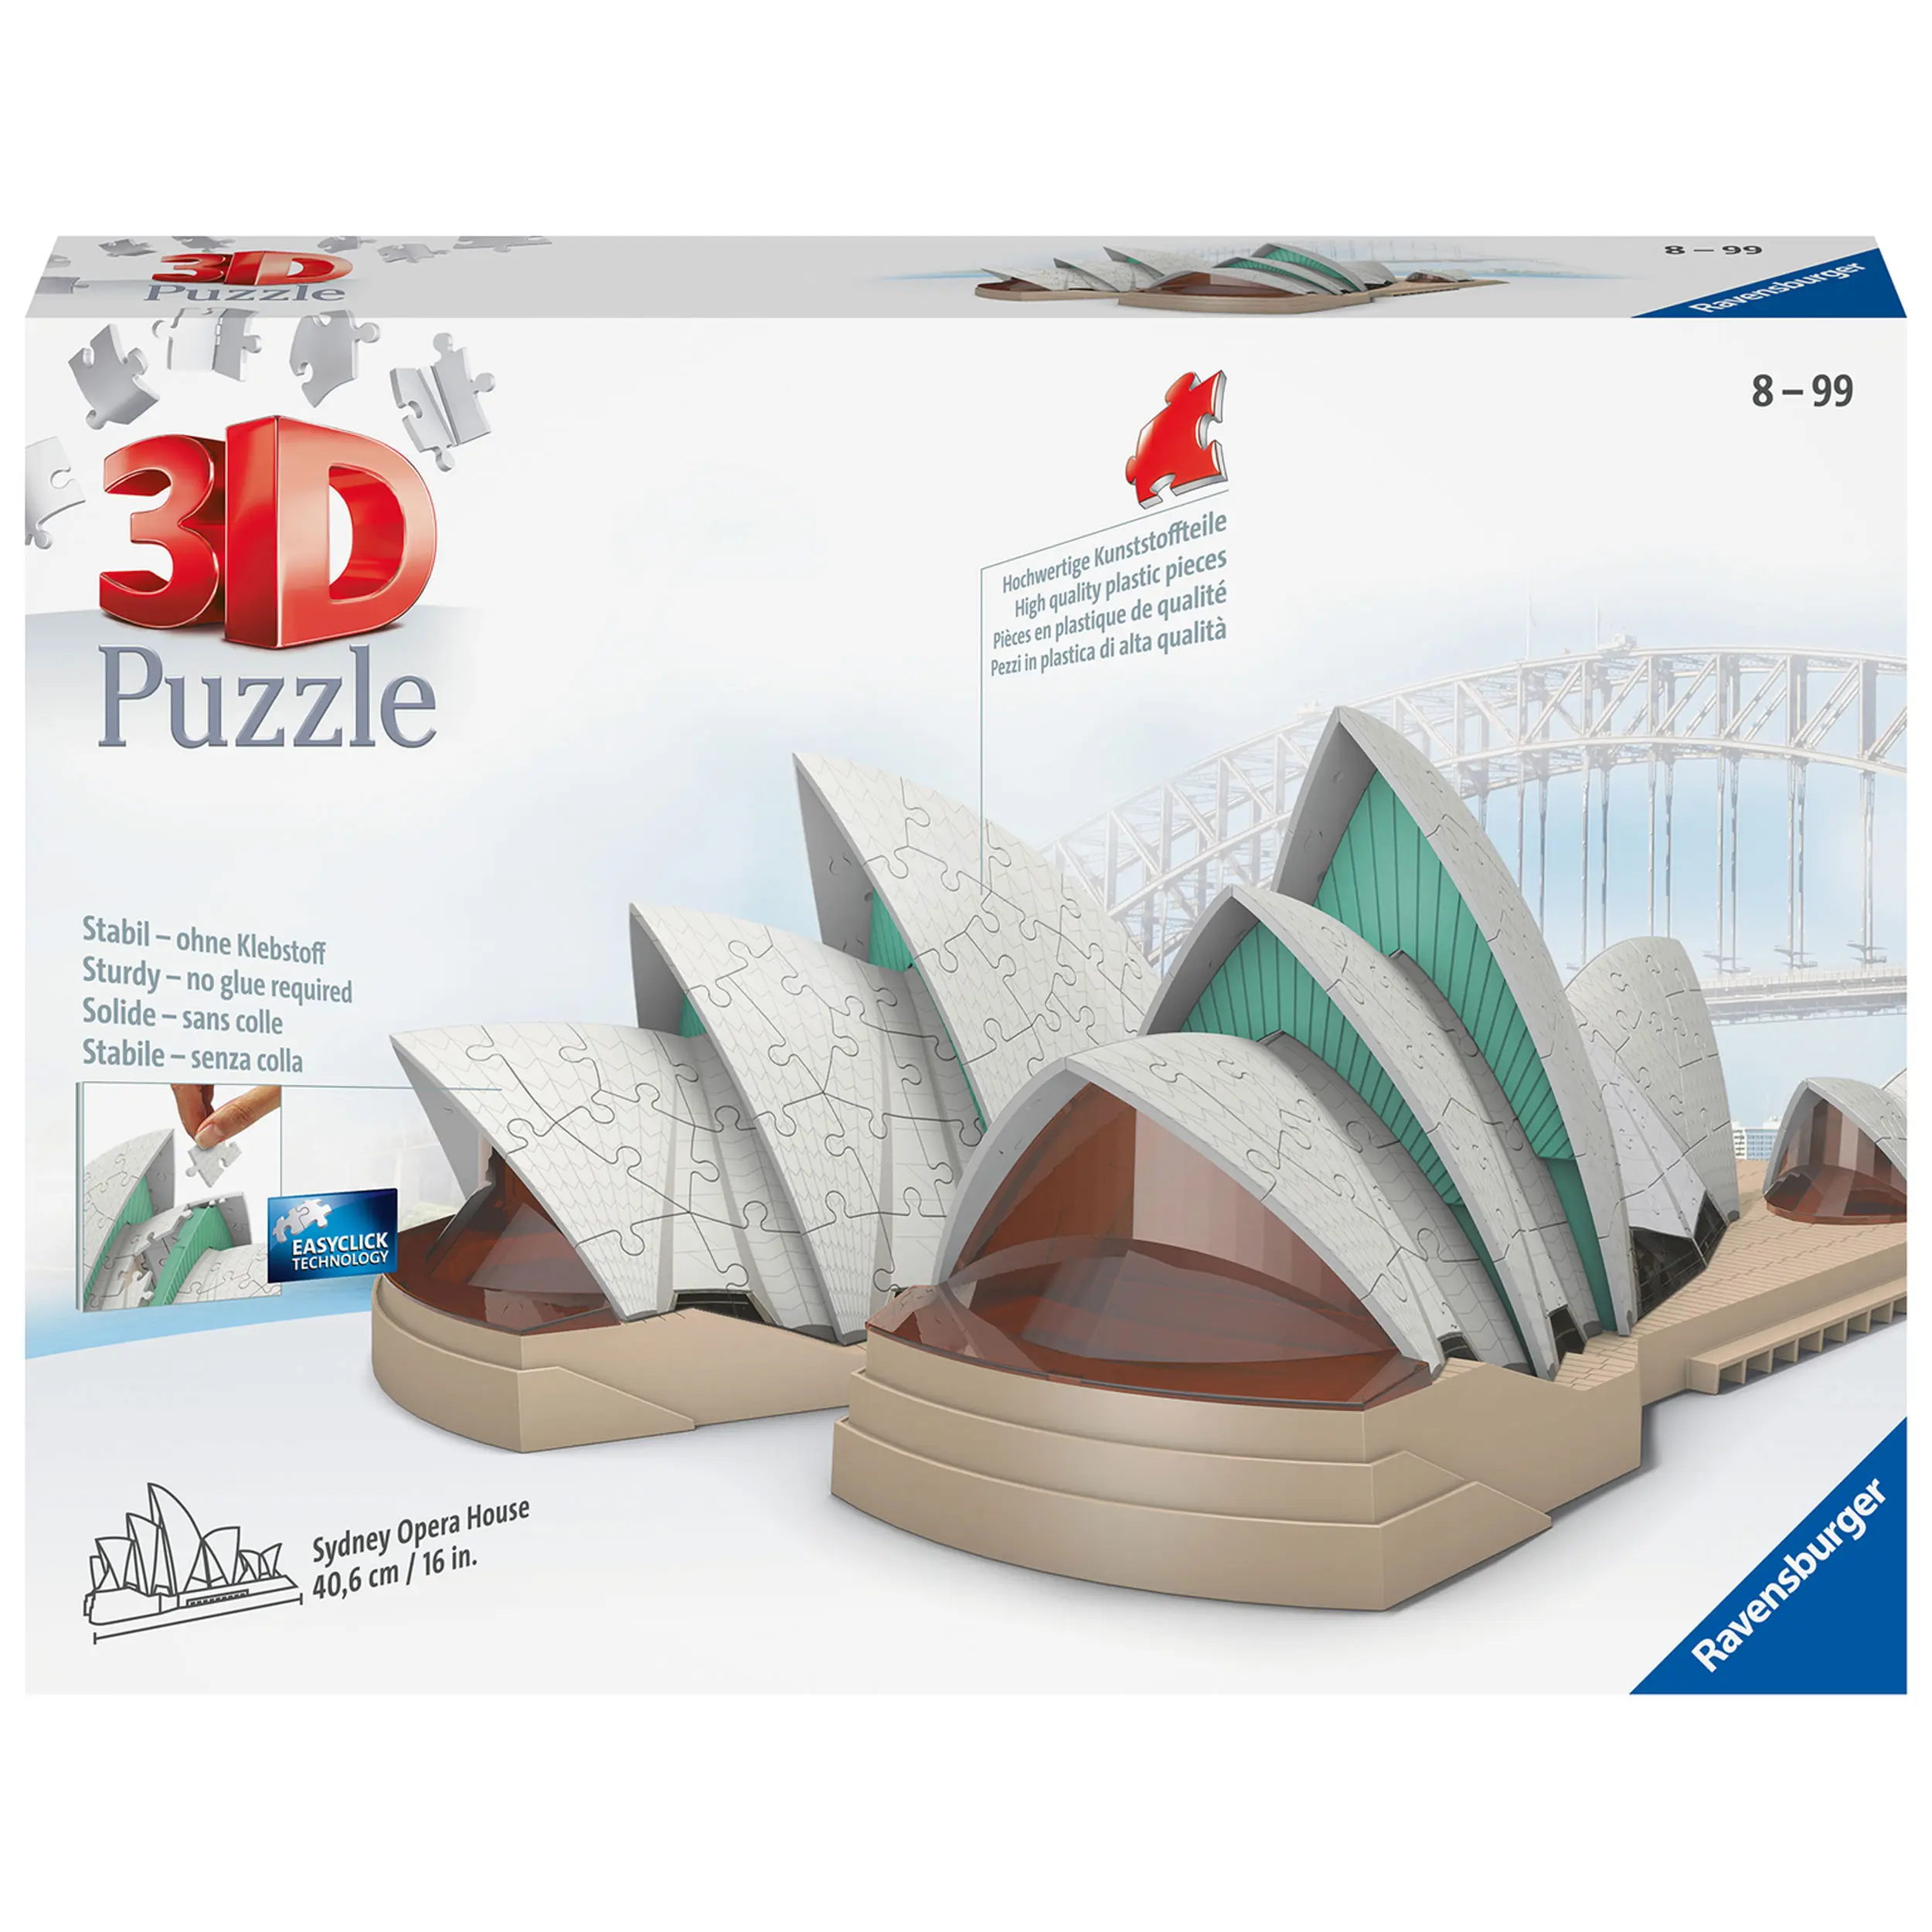 3D-Puzzle Sydney Opera